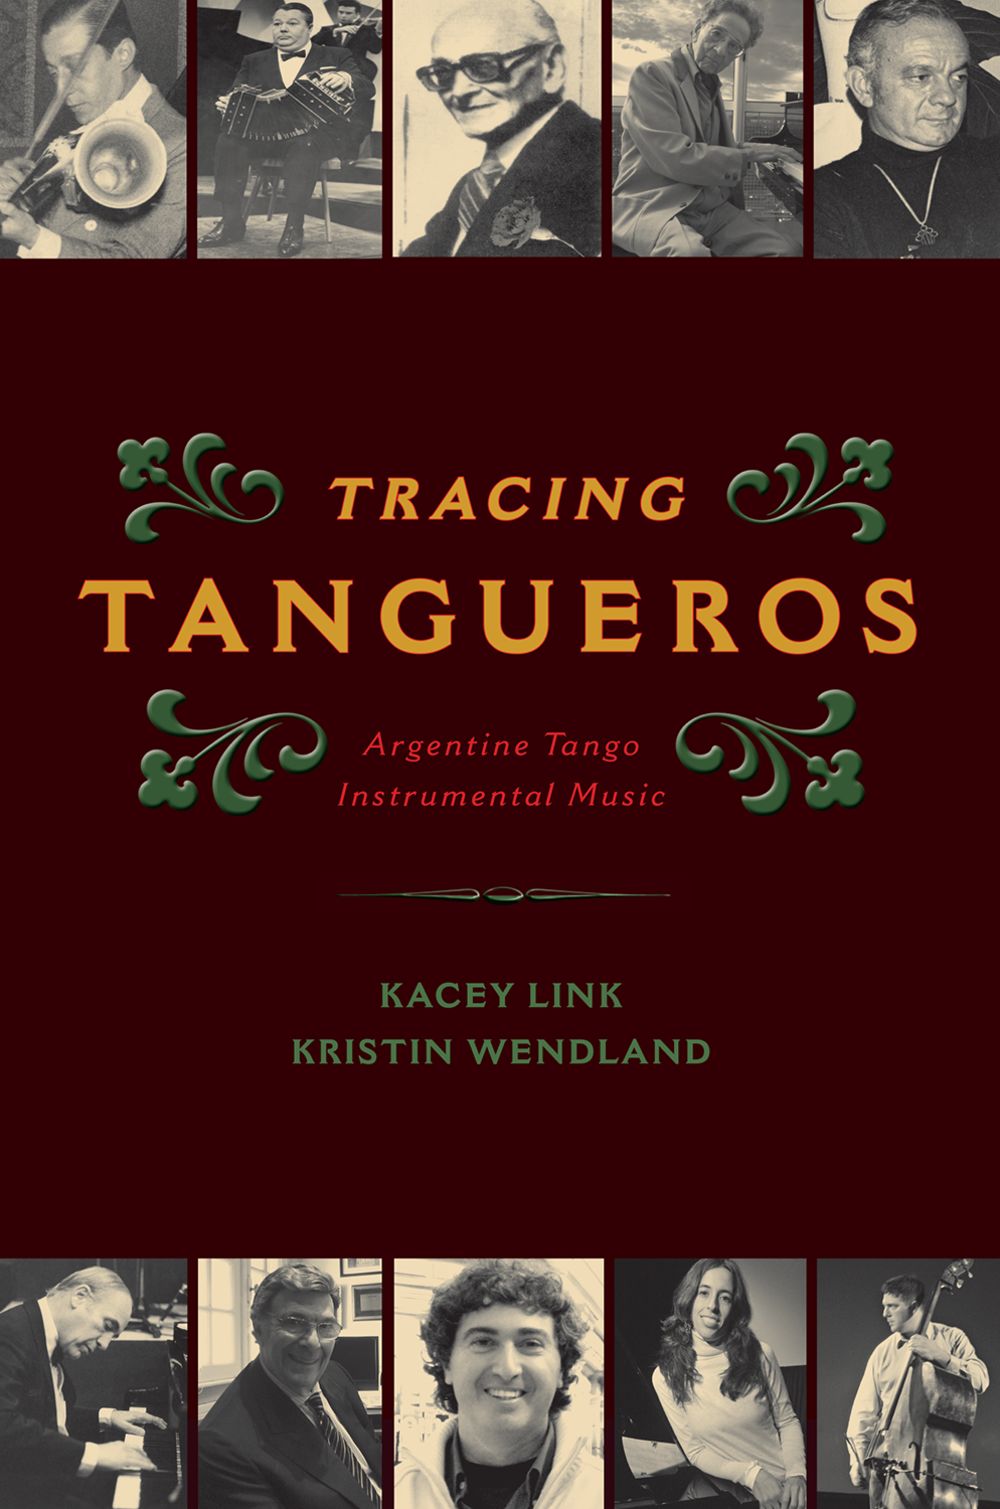 Link & Wendland Tracing Tangueros Hardback Sheet Music Songbook